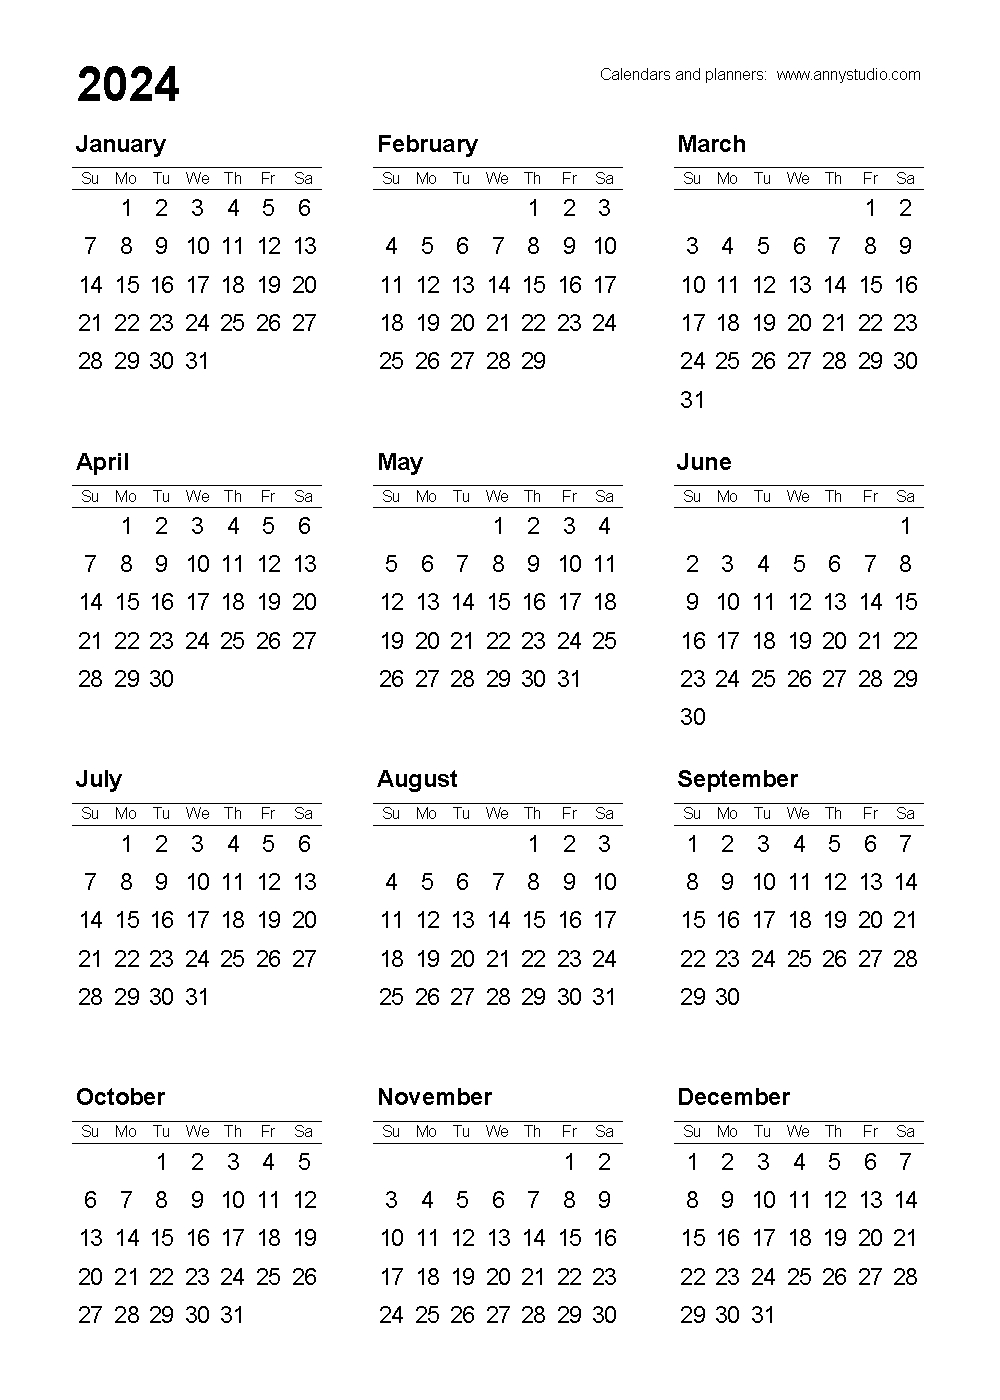 Free Printable Calendars And Planners 2024, 2025 And 2026 | Printable Calendar 2024 A4